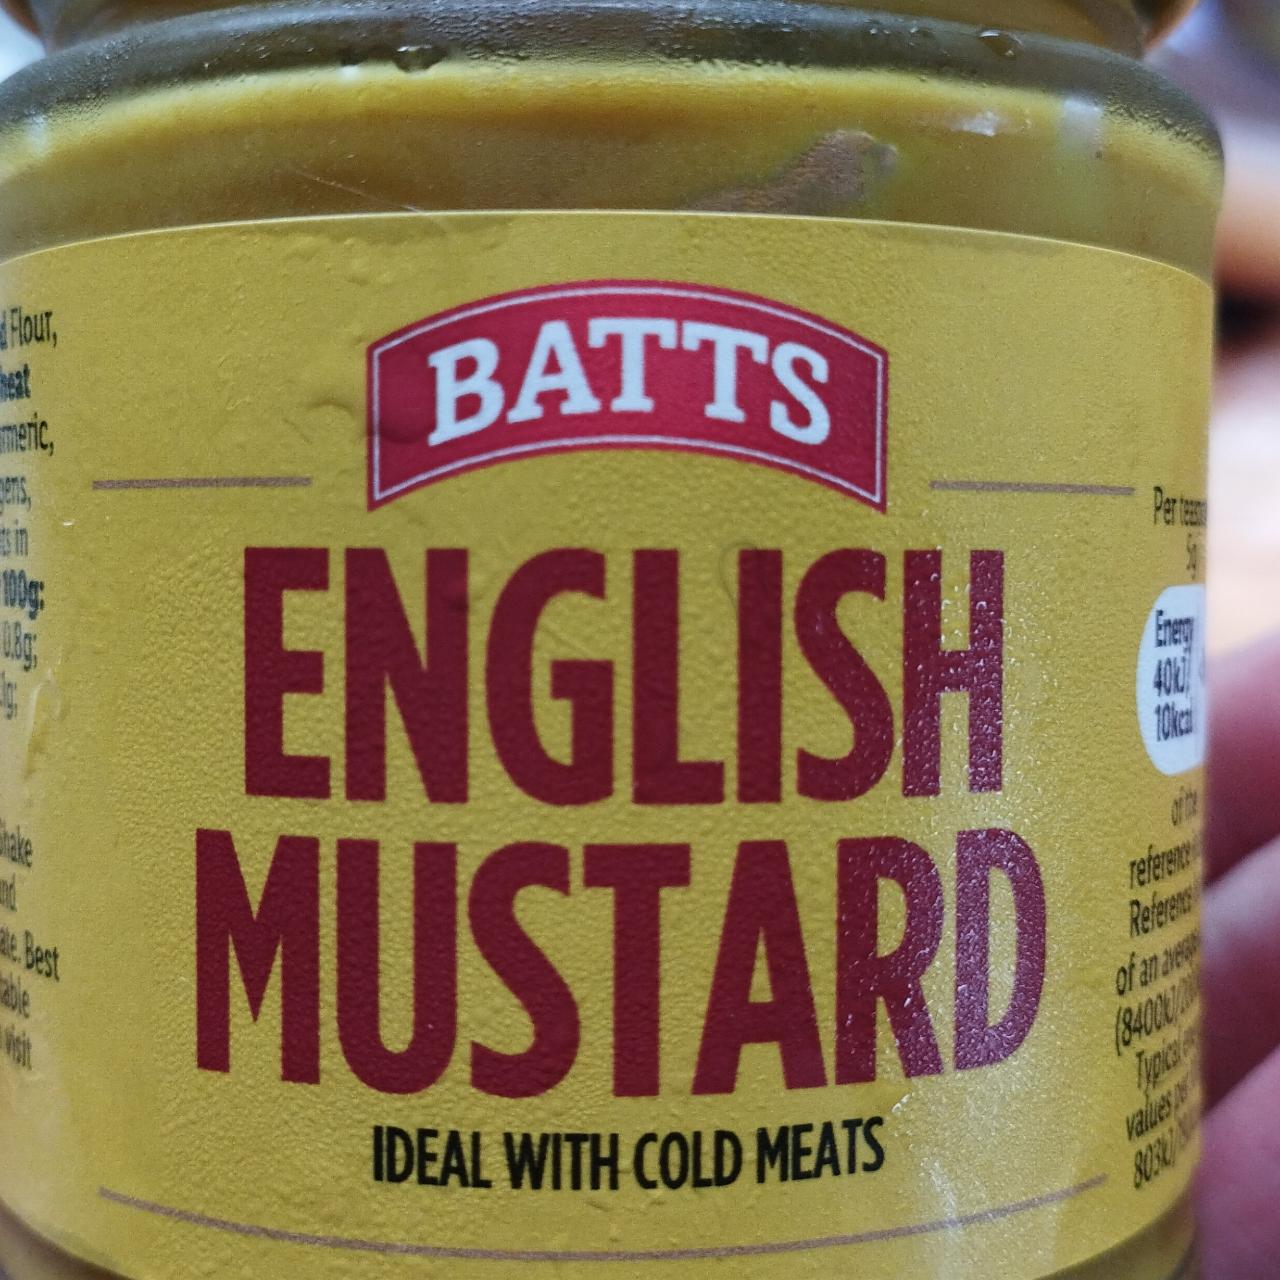 Фото - Гірчиця English Mustard Batts